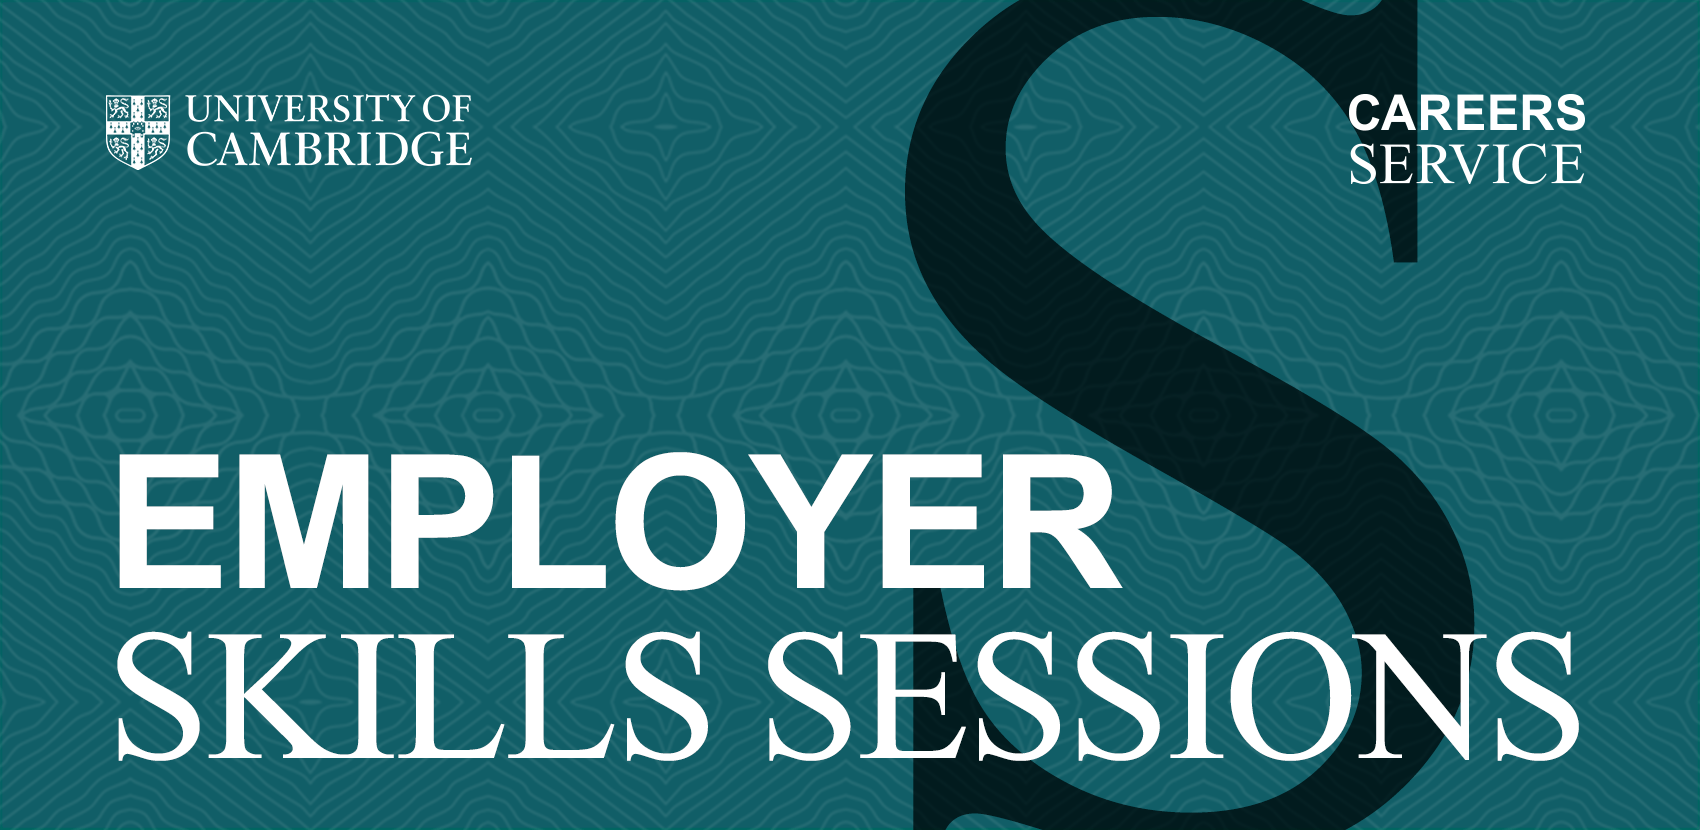 Employer skills sessions banner